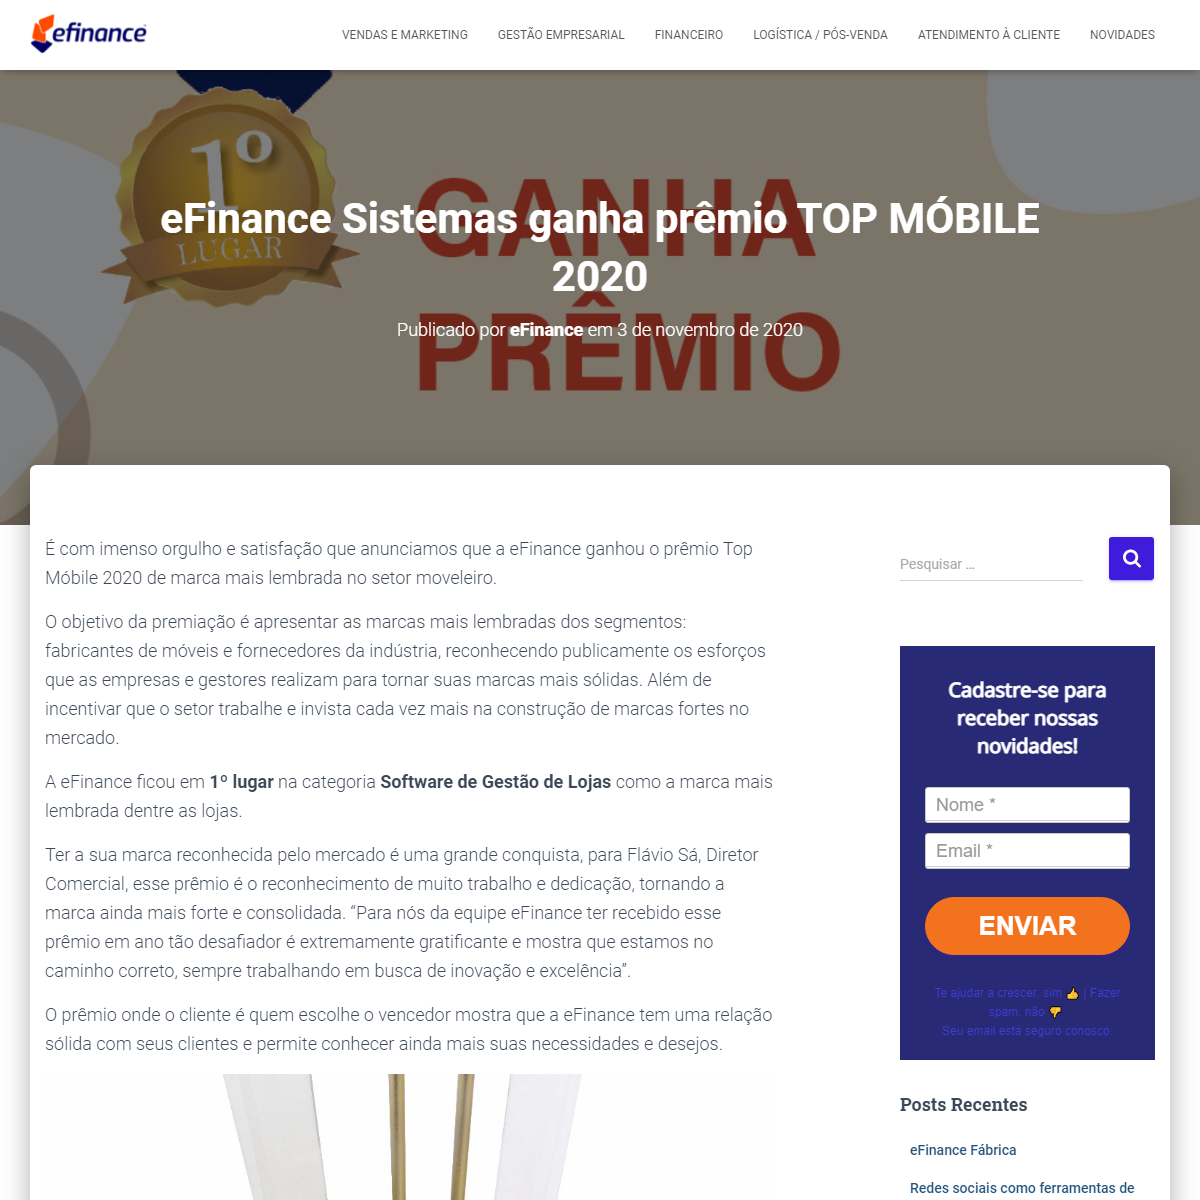 A complete backup of https://blog.efinance.com.br/efinance-sistemas-ganha-premio-top-mobile-2020/